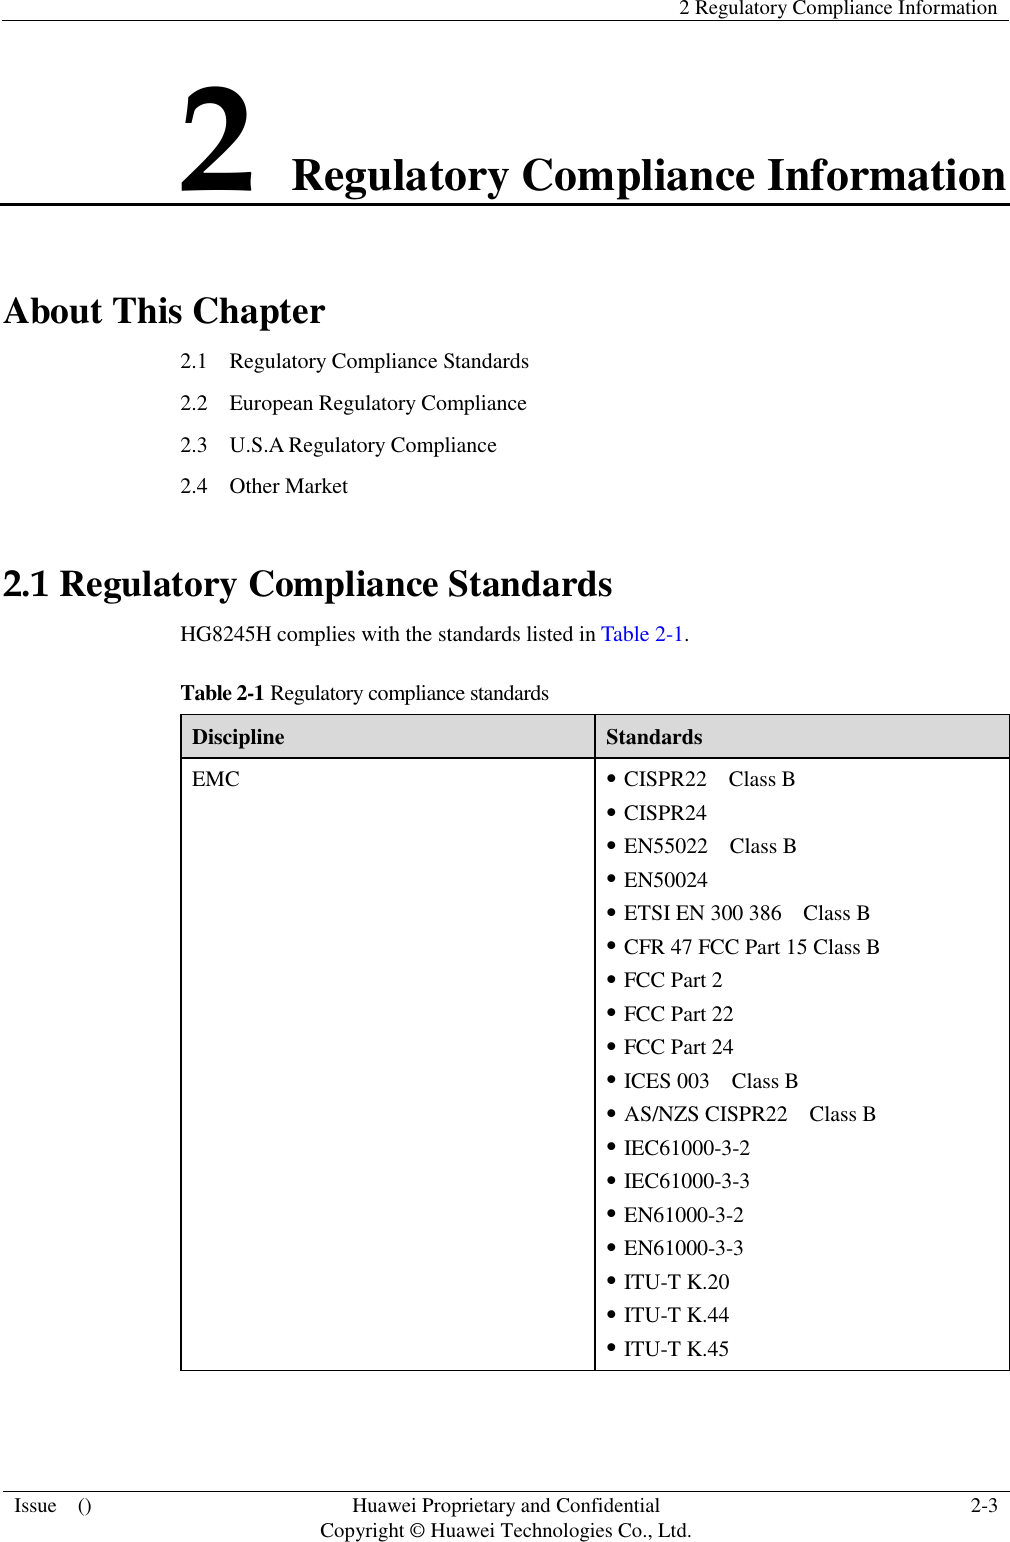   2 Regulatory Compliance Information  Issue    () Huawei Proprietary and Confidential                                     Copyright © Huawei Technologies Co., Ltd. 2-3  2 Regulatory Compliance Information About This Chapter 2.1    Regulatory Compliance Standards 2.2    European Regulatory Compliance 2.3    U.S.A Regulatory Compliance 2.4  Other Market 2.1 Regulatory Compliance Standards HG8245H complies with the standards listed in Table 2-1. Table 2-1 Regulatory compliance standards Discipline Standards EMC  CISPR22    Class B  CISPR24  EN55022    Class B  EN50024  ETSI EN 300 386    Class B  CFR 47 FCC Part 15 Class B  FCC Part 2  FCC Part 22  FCC Part 24  ICES 003    Class B  AS/NZS CISPR22    Class B  IEC61000-3-2  IEC61000-3-3  EN61000-3-2  EN61000-3-3  ITU-T K.20  ITU-T K.44  ITU-T K.45 